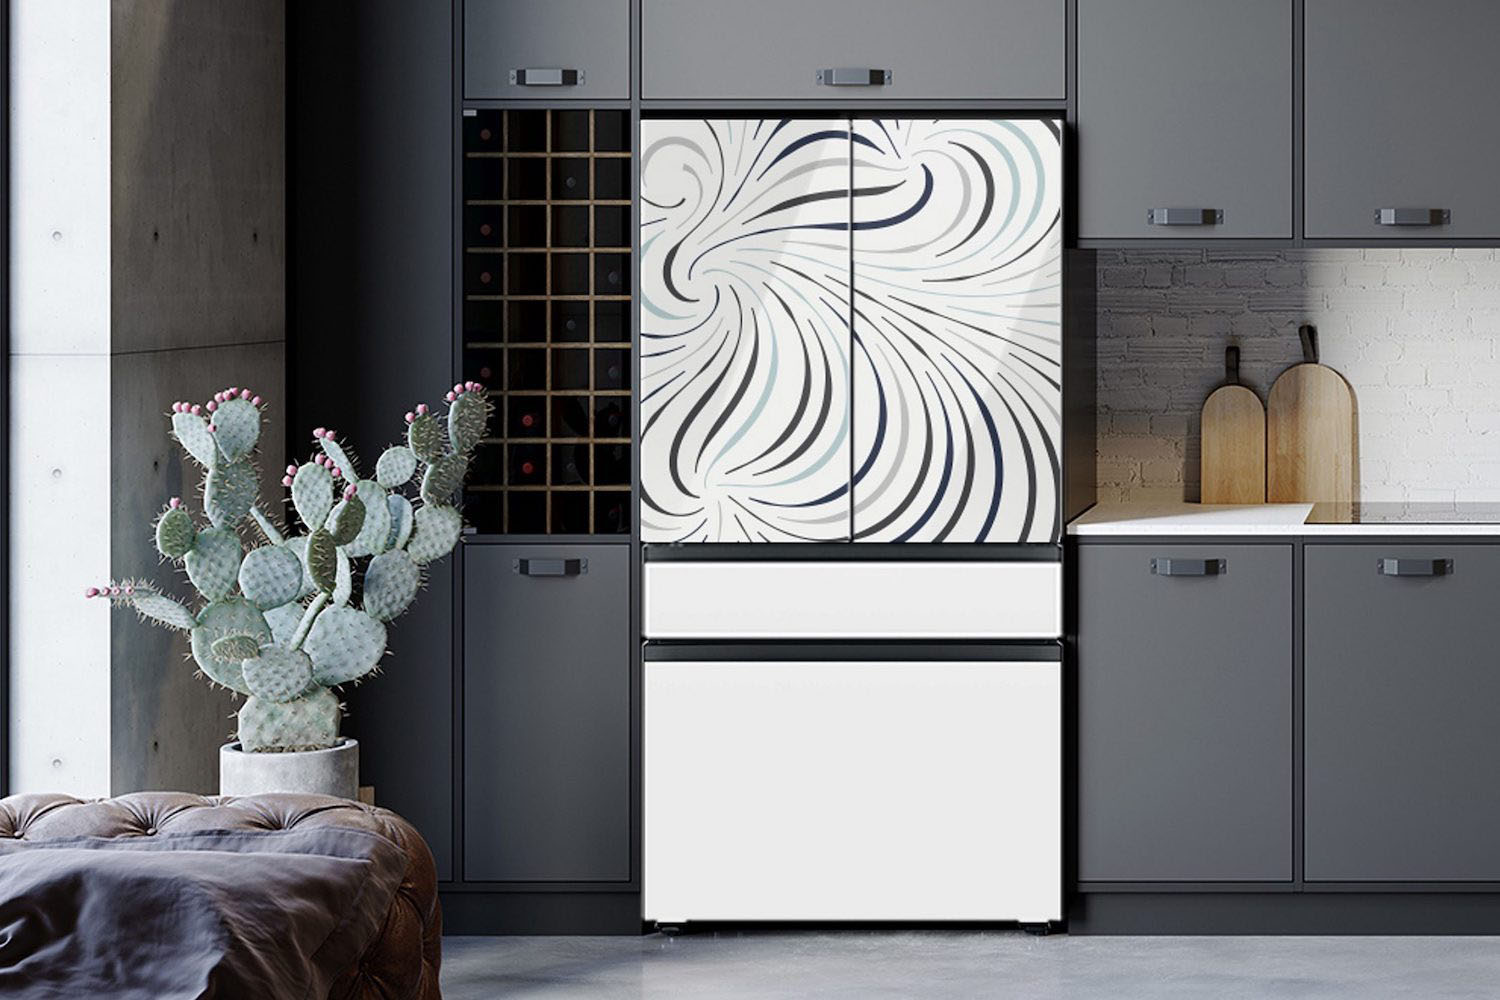 a kitchen with a bespoke Samsung tech fridge